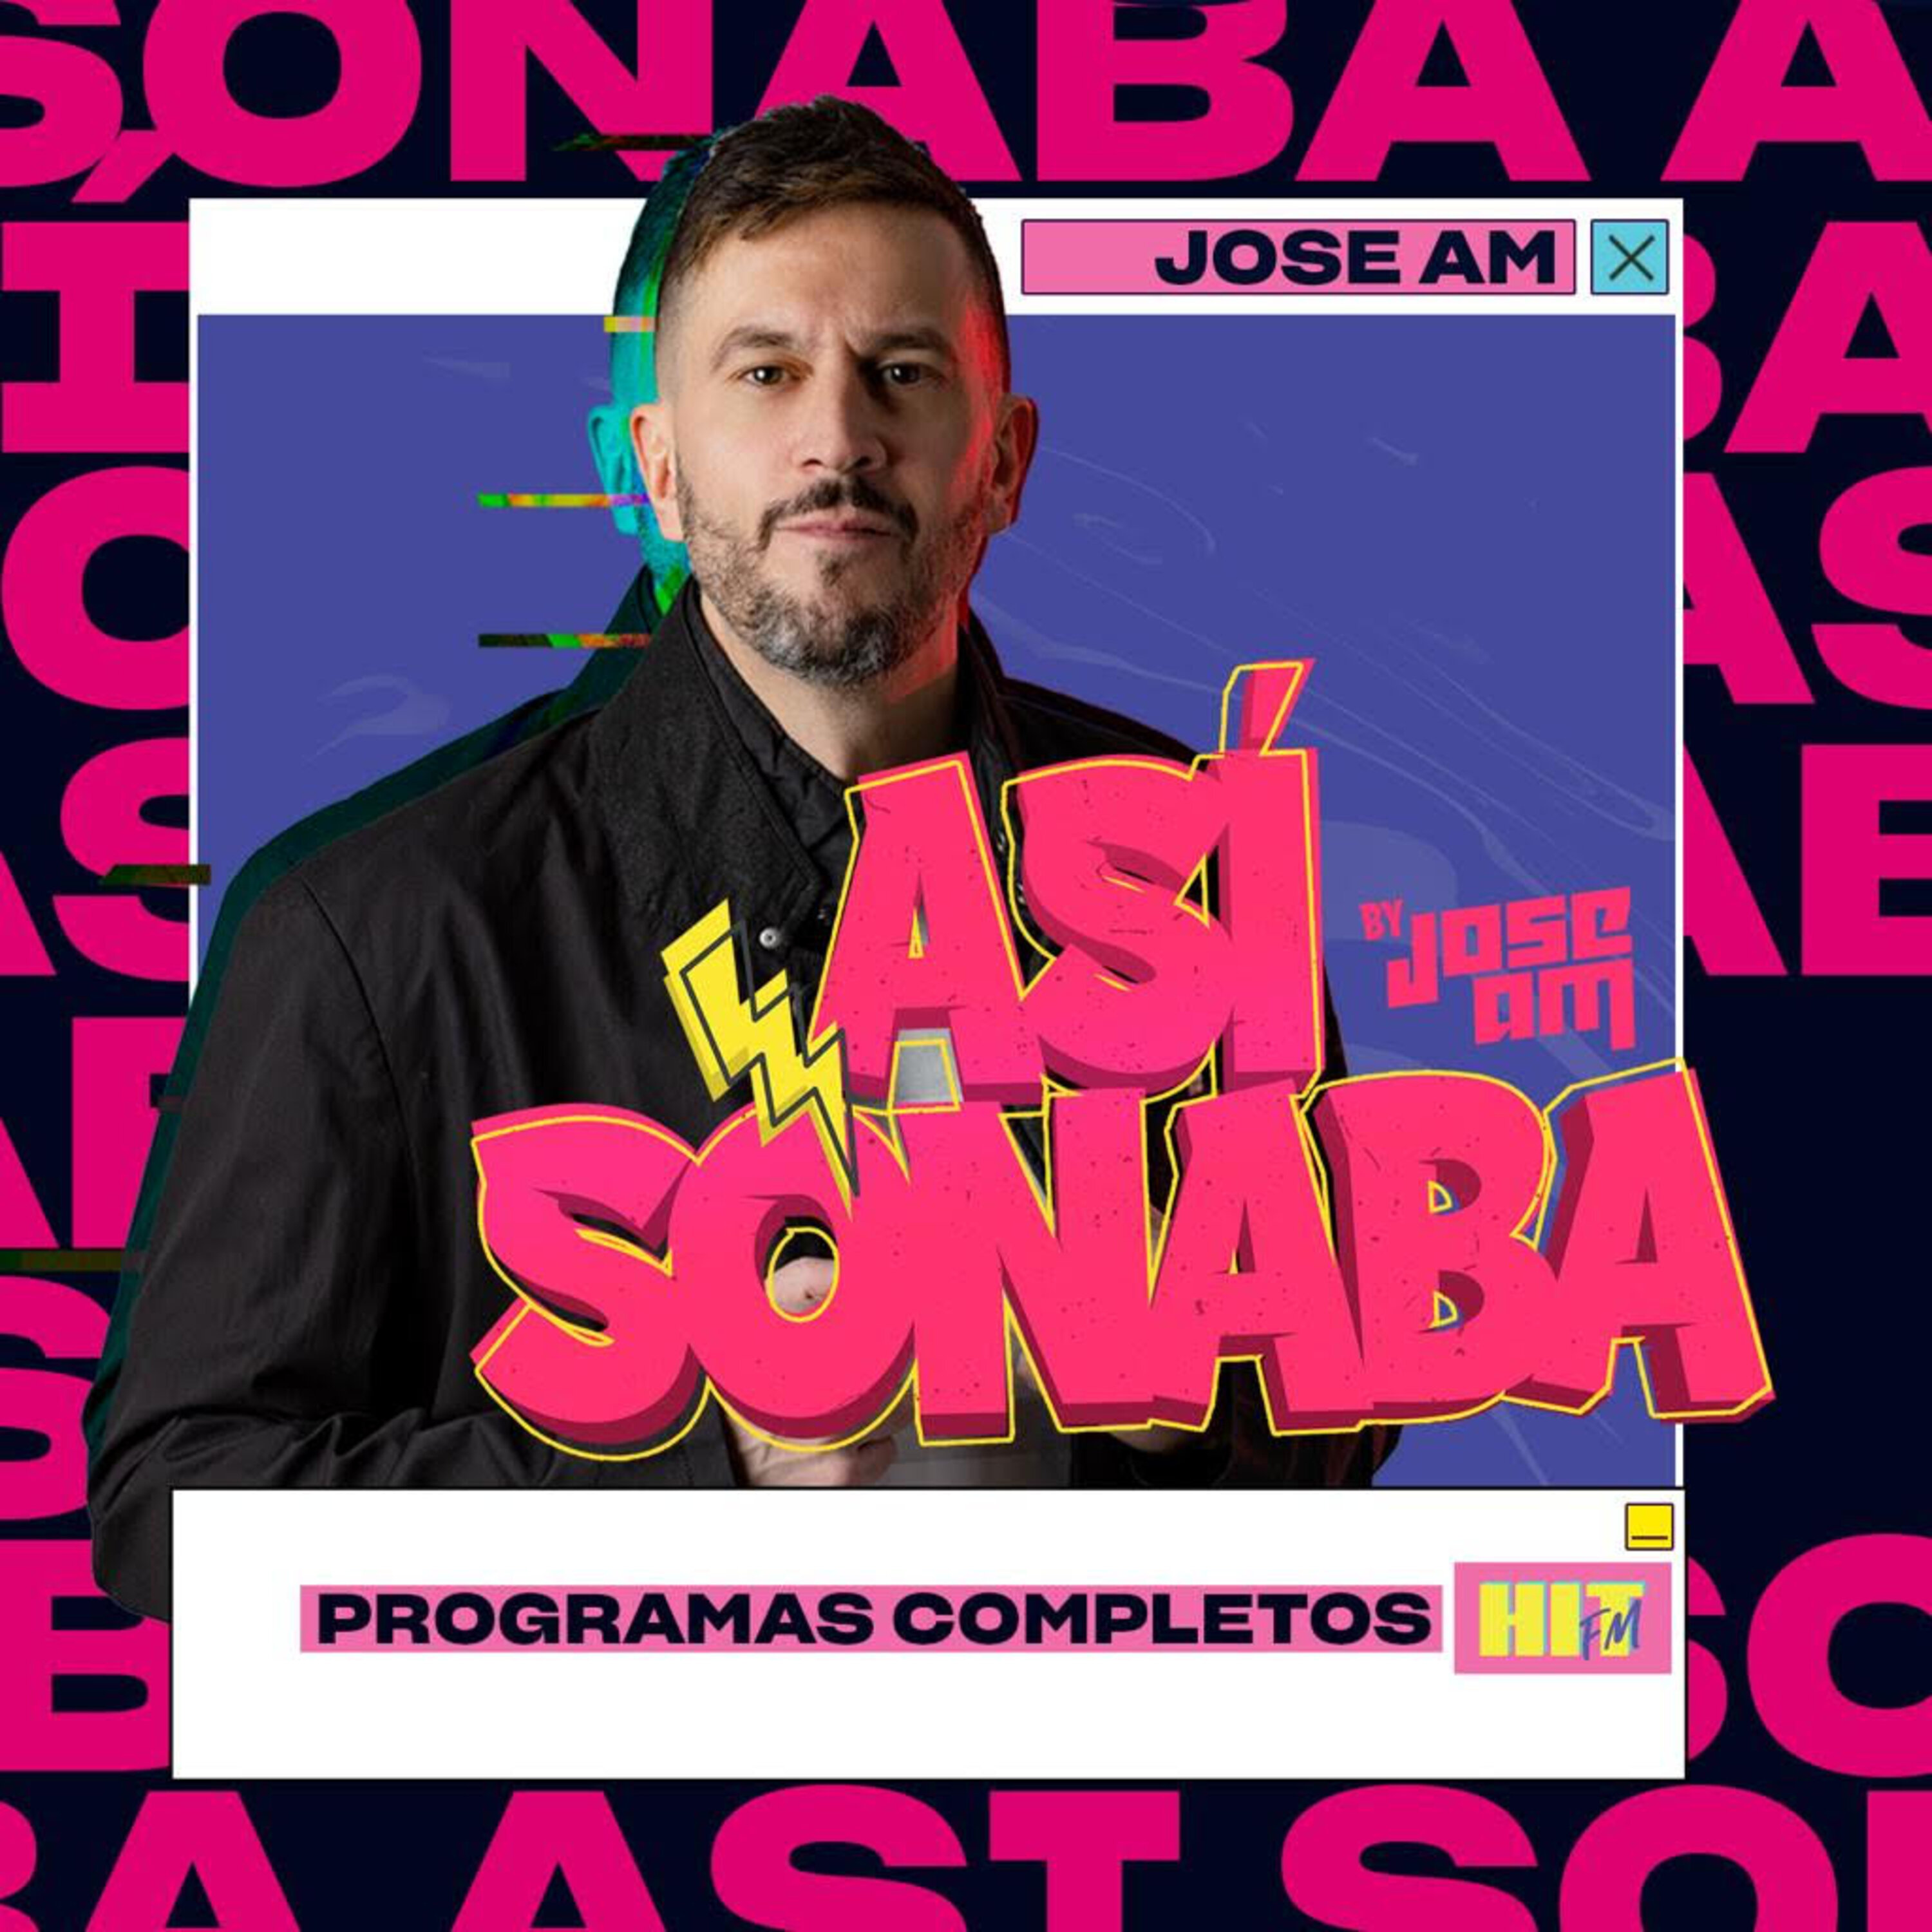 Así Sonaba by Jose AM EP 034